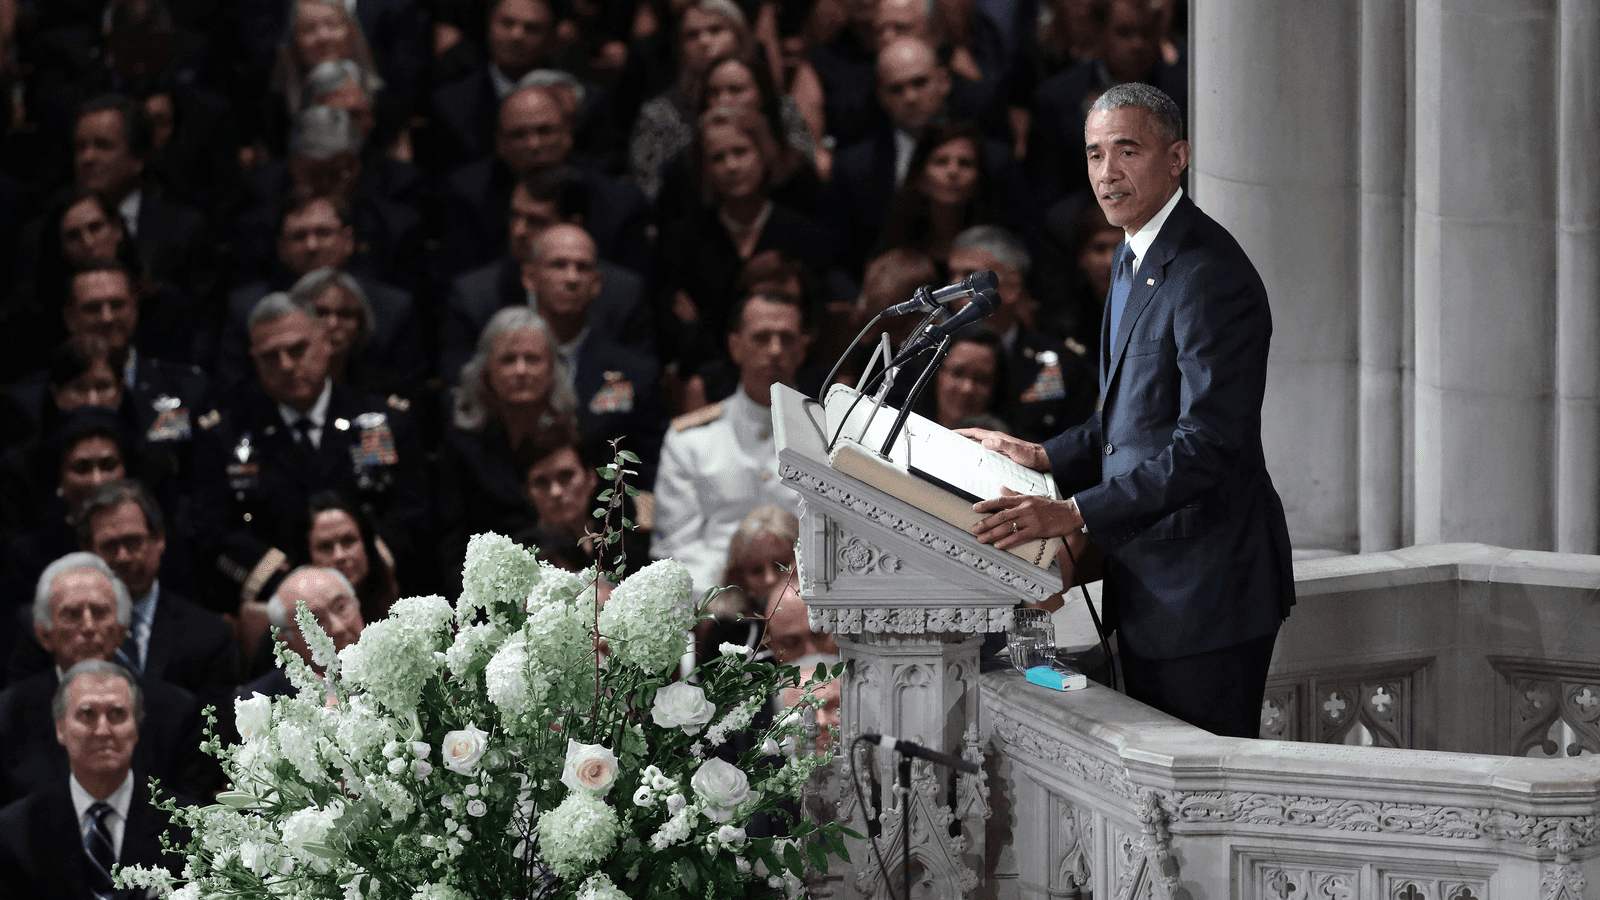 ex president barack obama gives a eulogy at john mccain's funeral